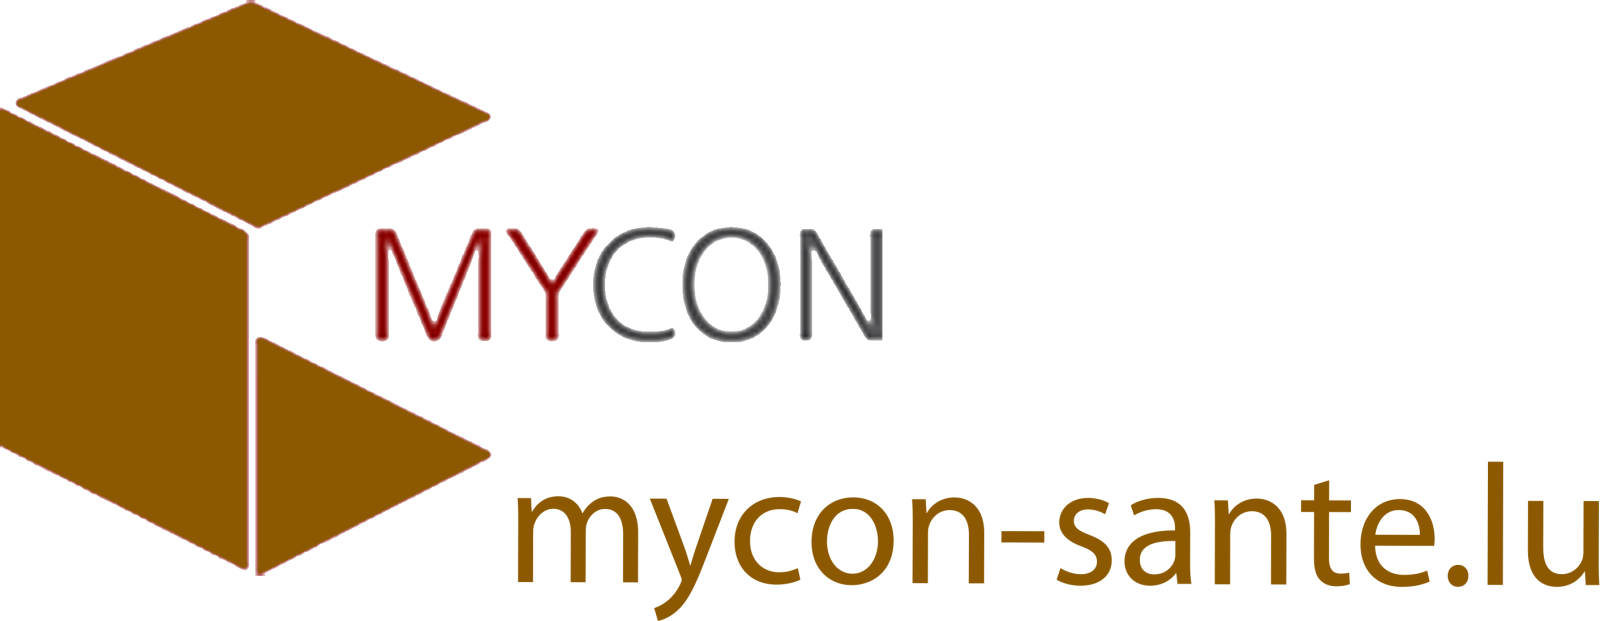 Unser Team Mycon Sà Rl Ingenieurs Luxemburg